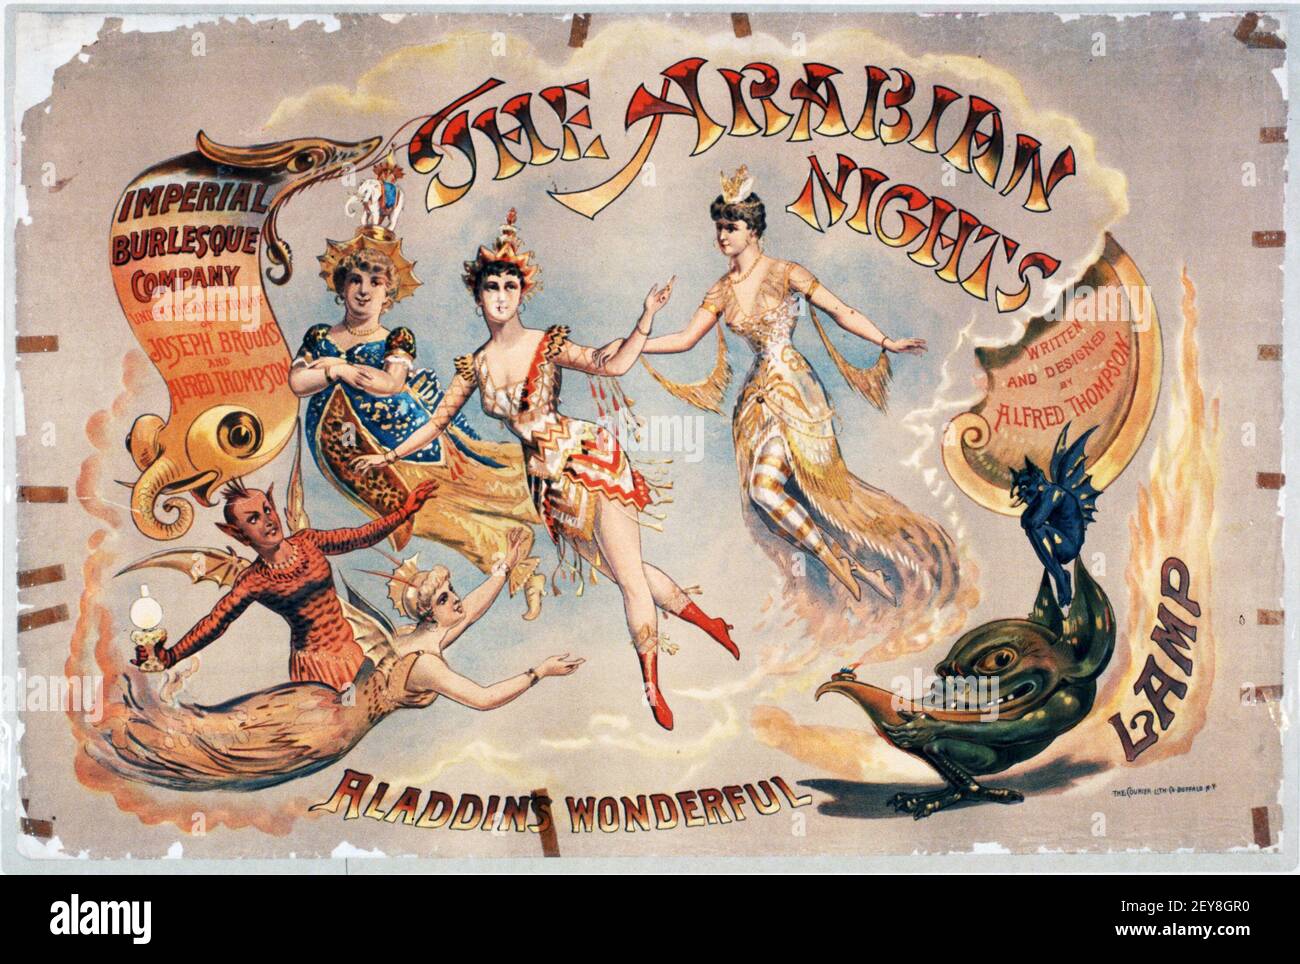 Die Arabian Nights oder Aladdins Wonderful Lamp. Klassisches Show-Poster. Imperial Burlesque Co. 1888. Stockfoto